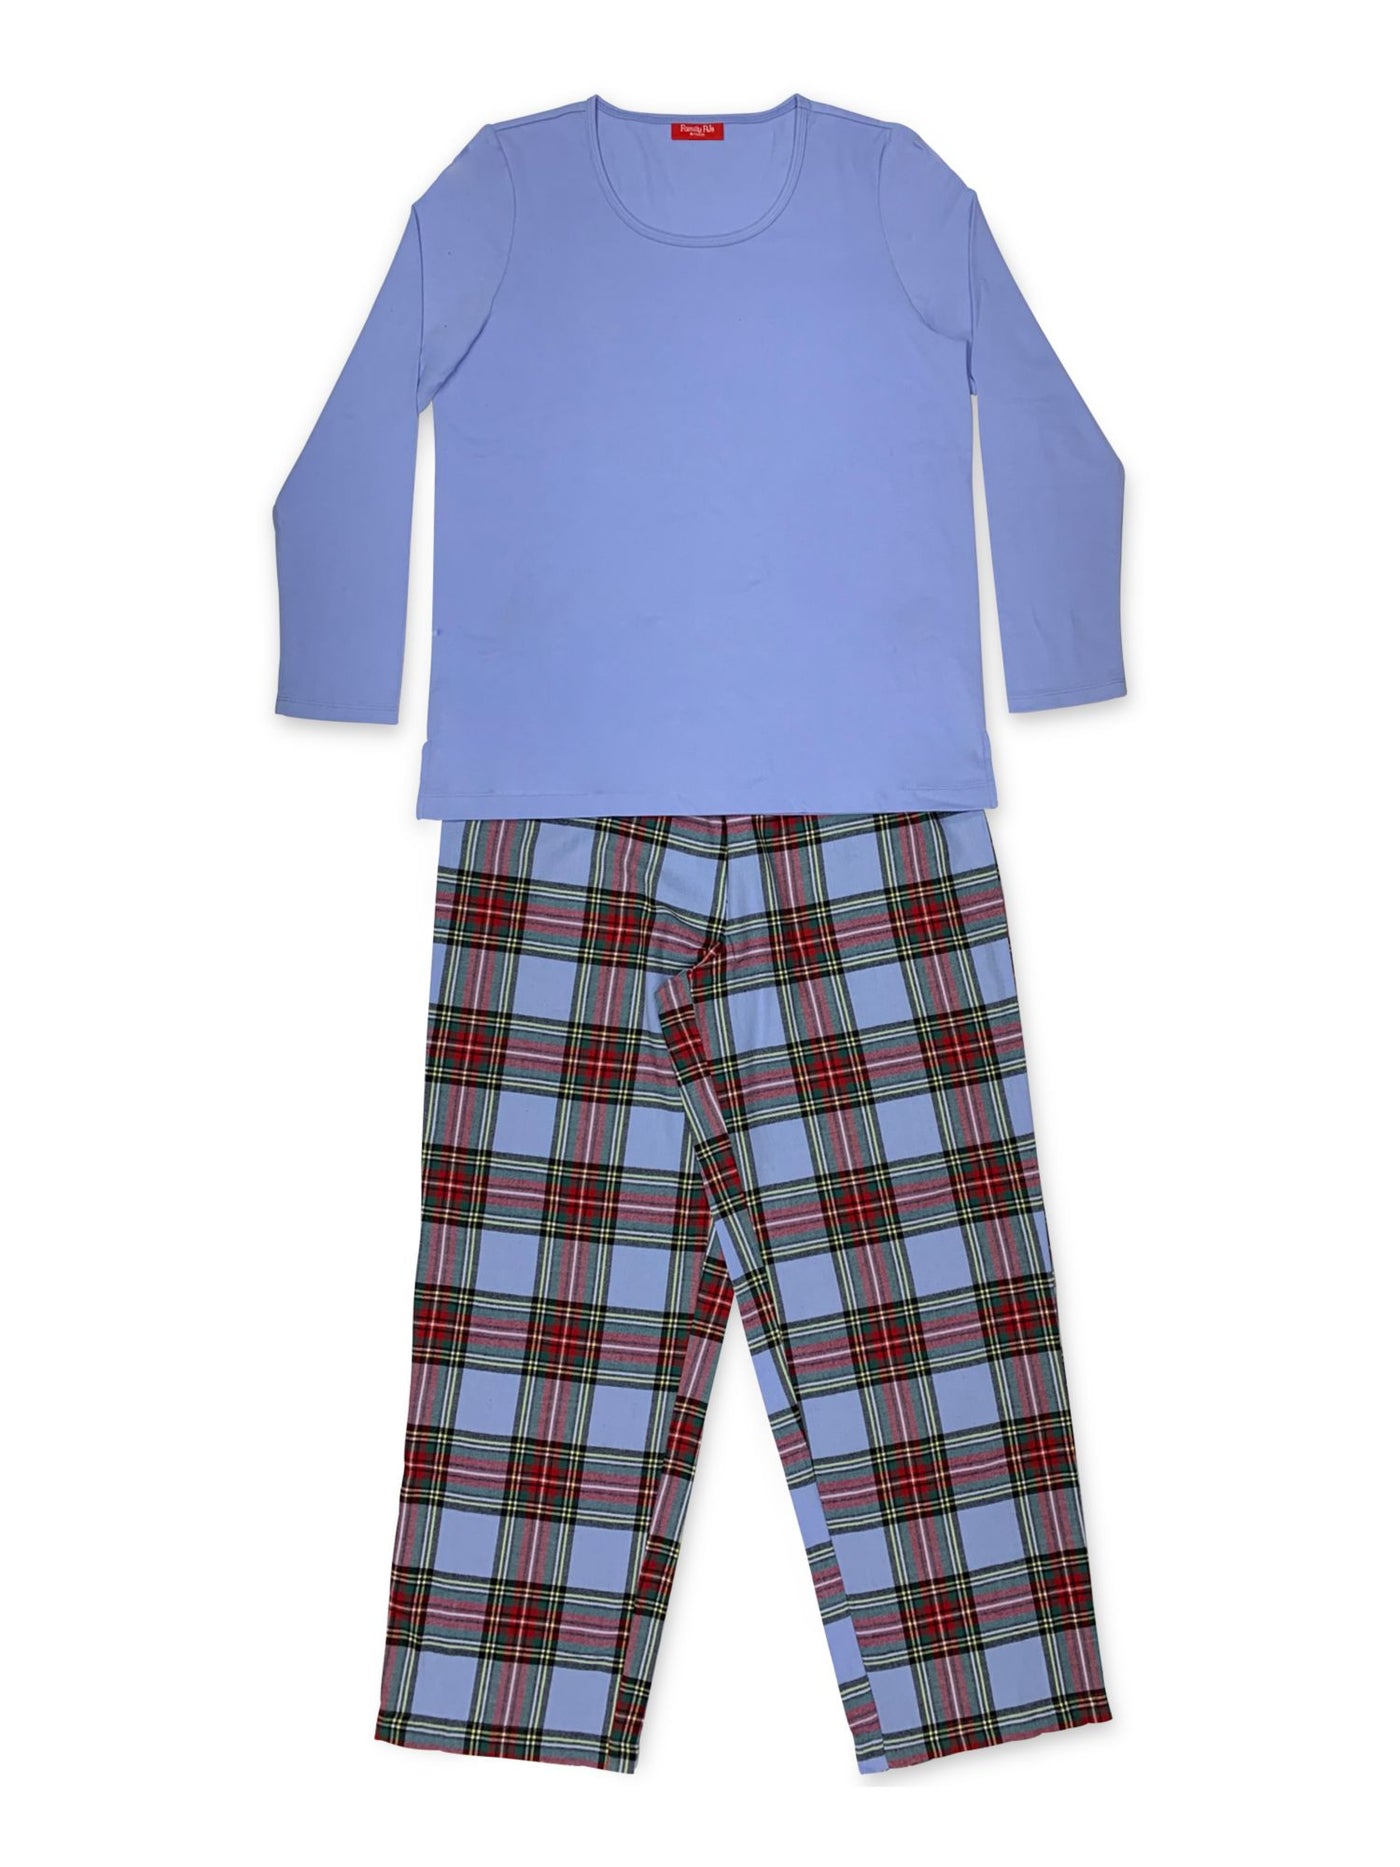 FAMILY PJs Intimates Blue Set Plaid Pajamas L